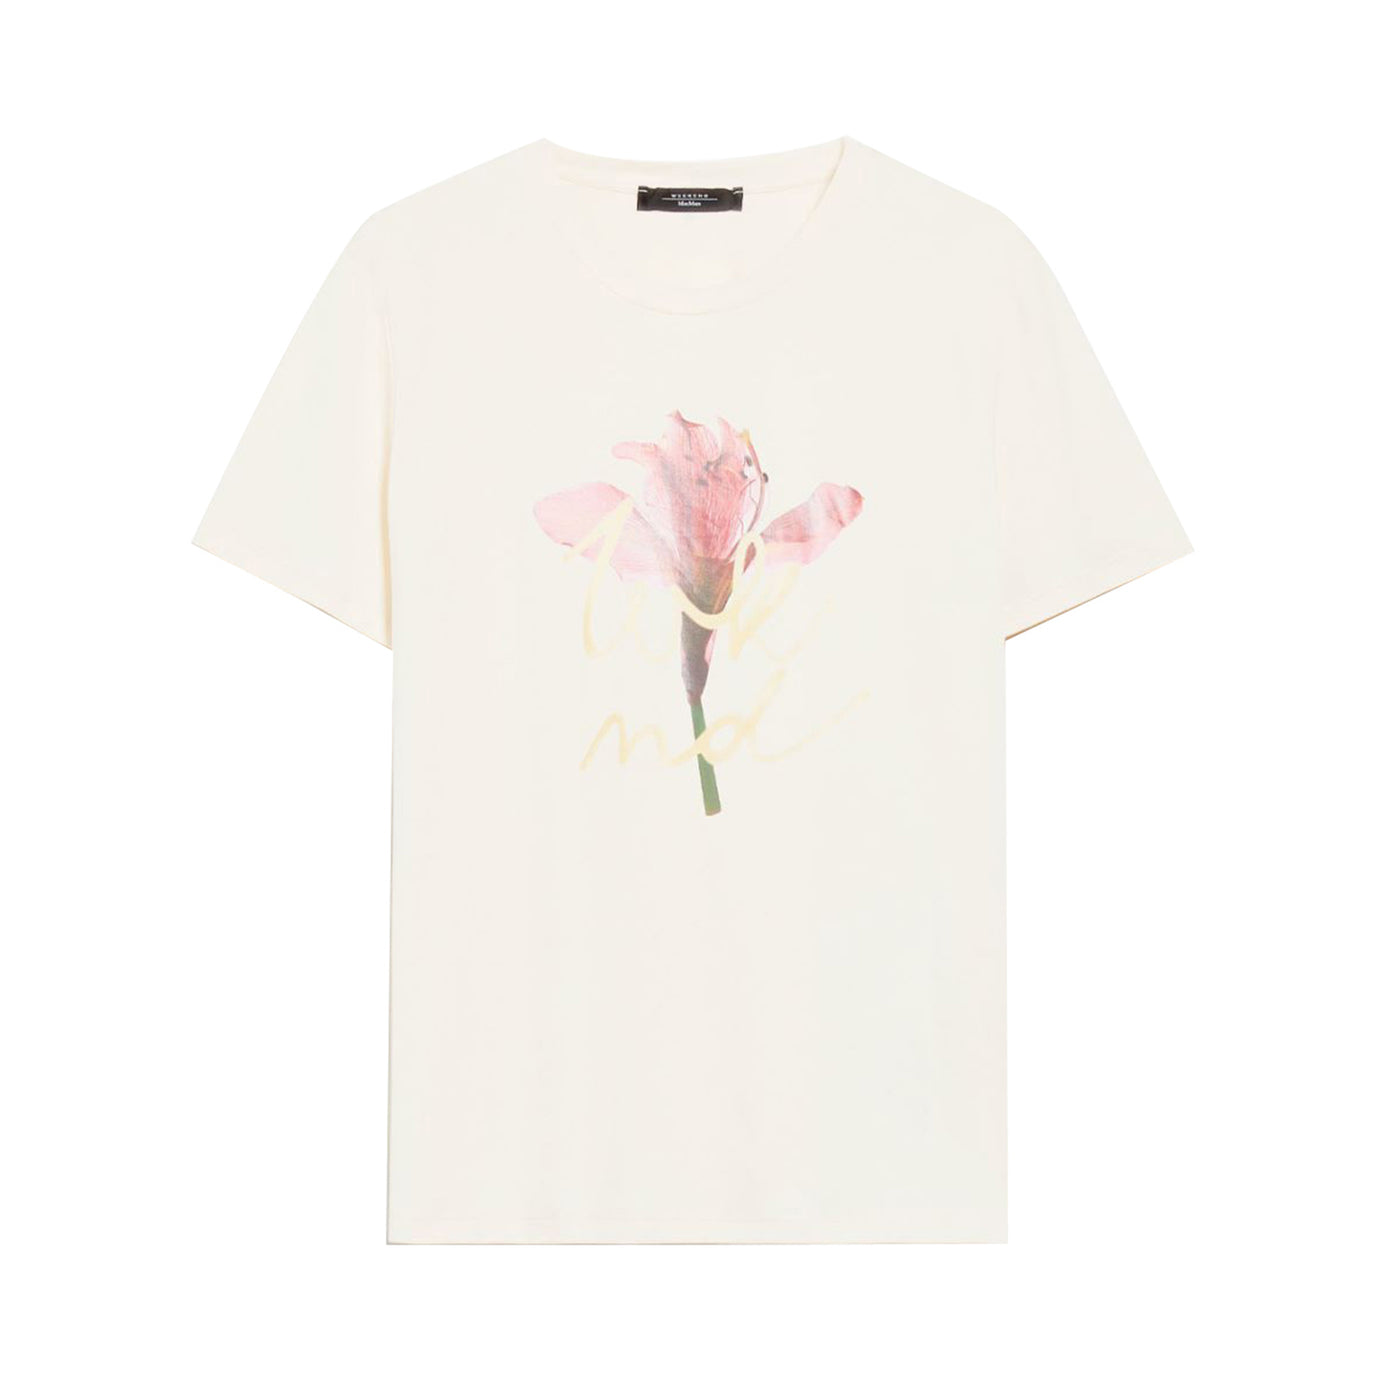 Women's T-Shirt with flower print